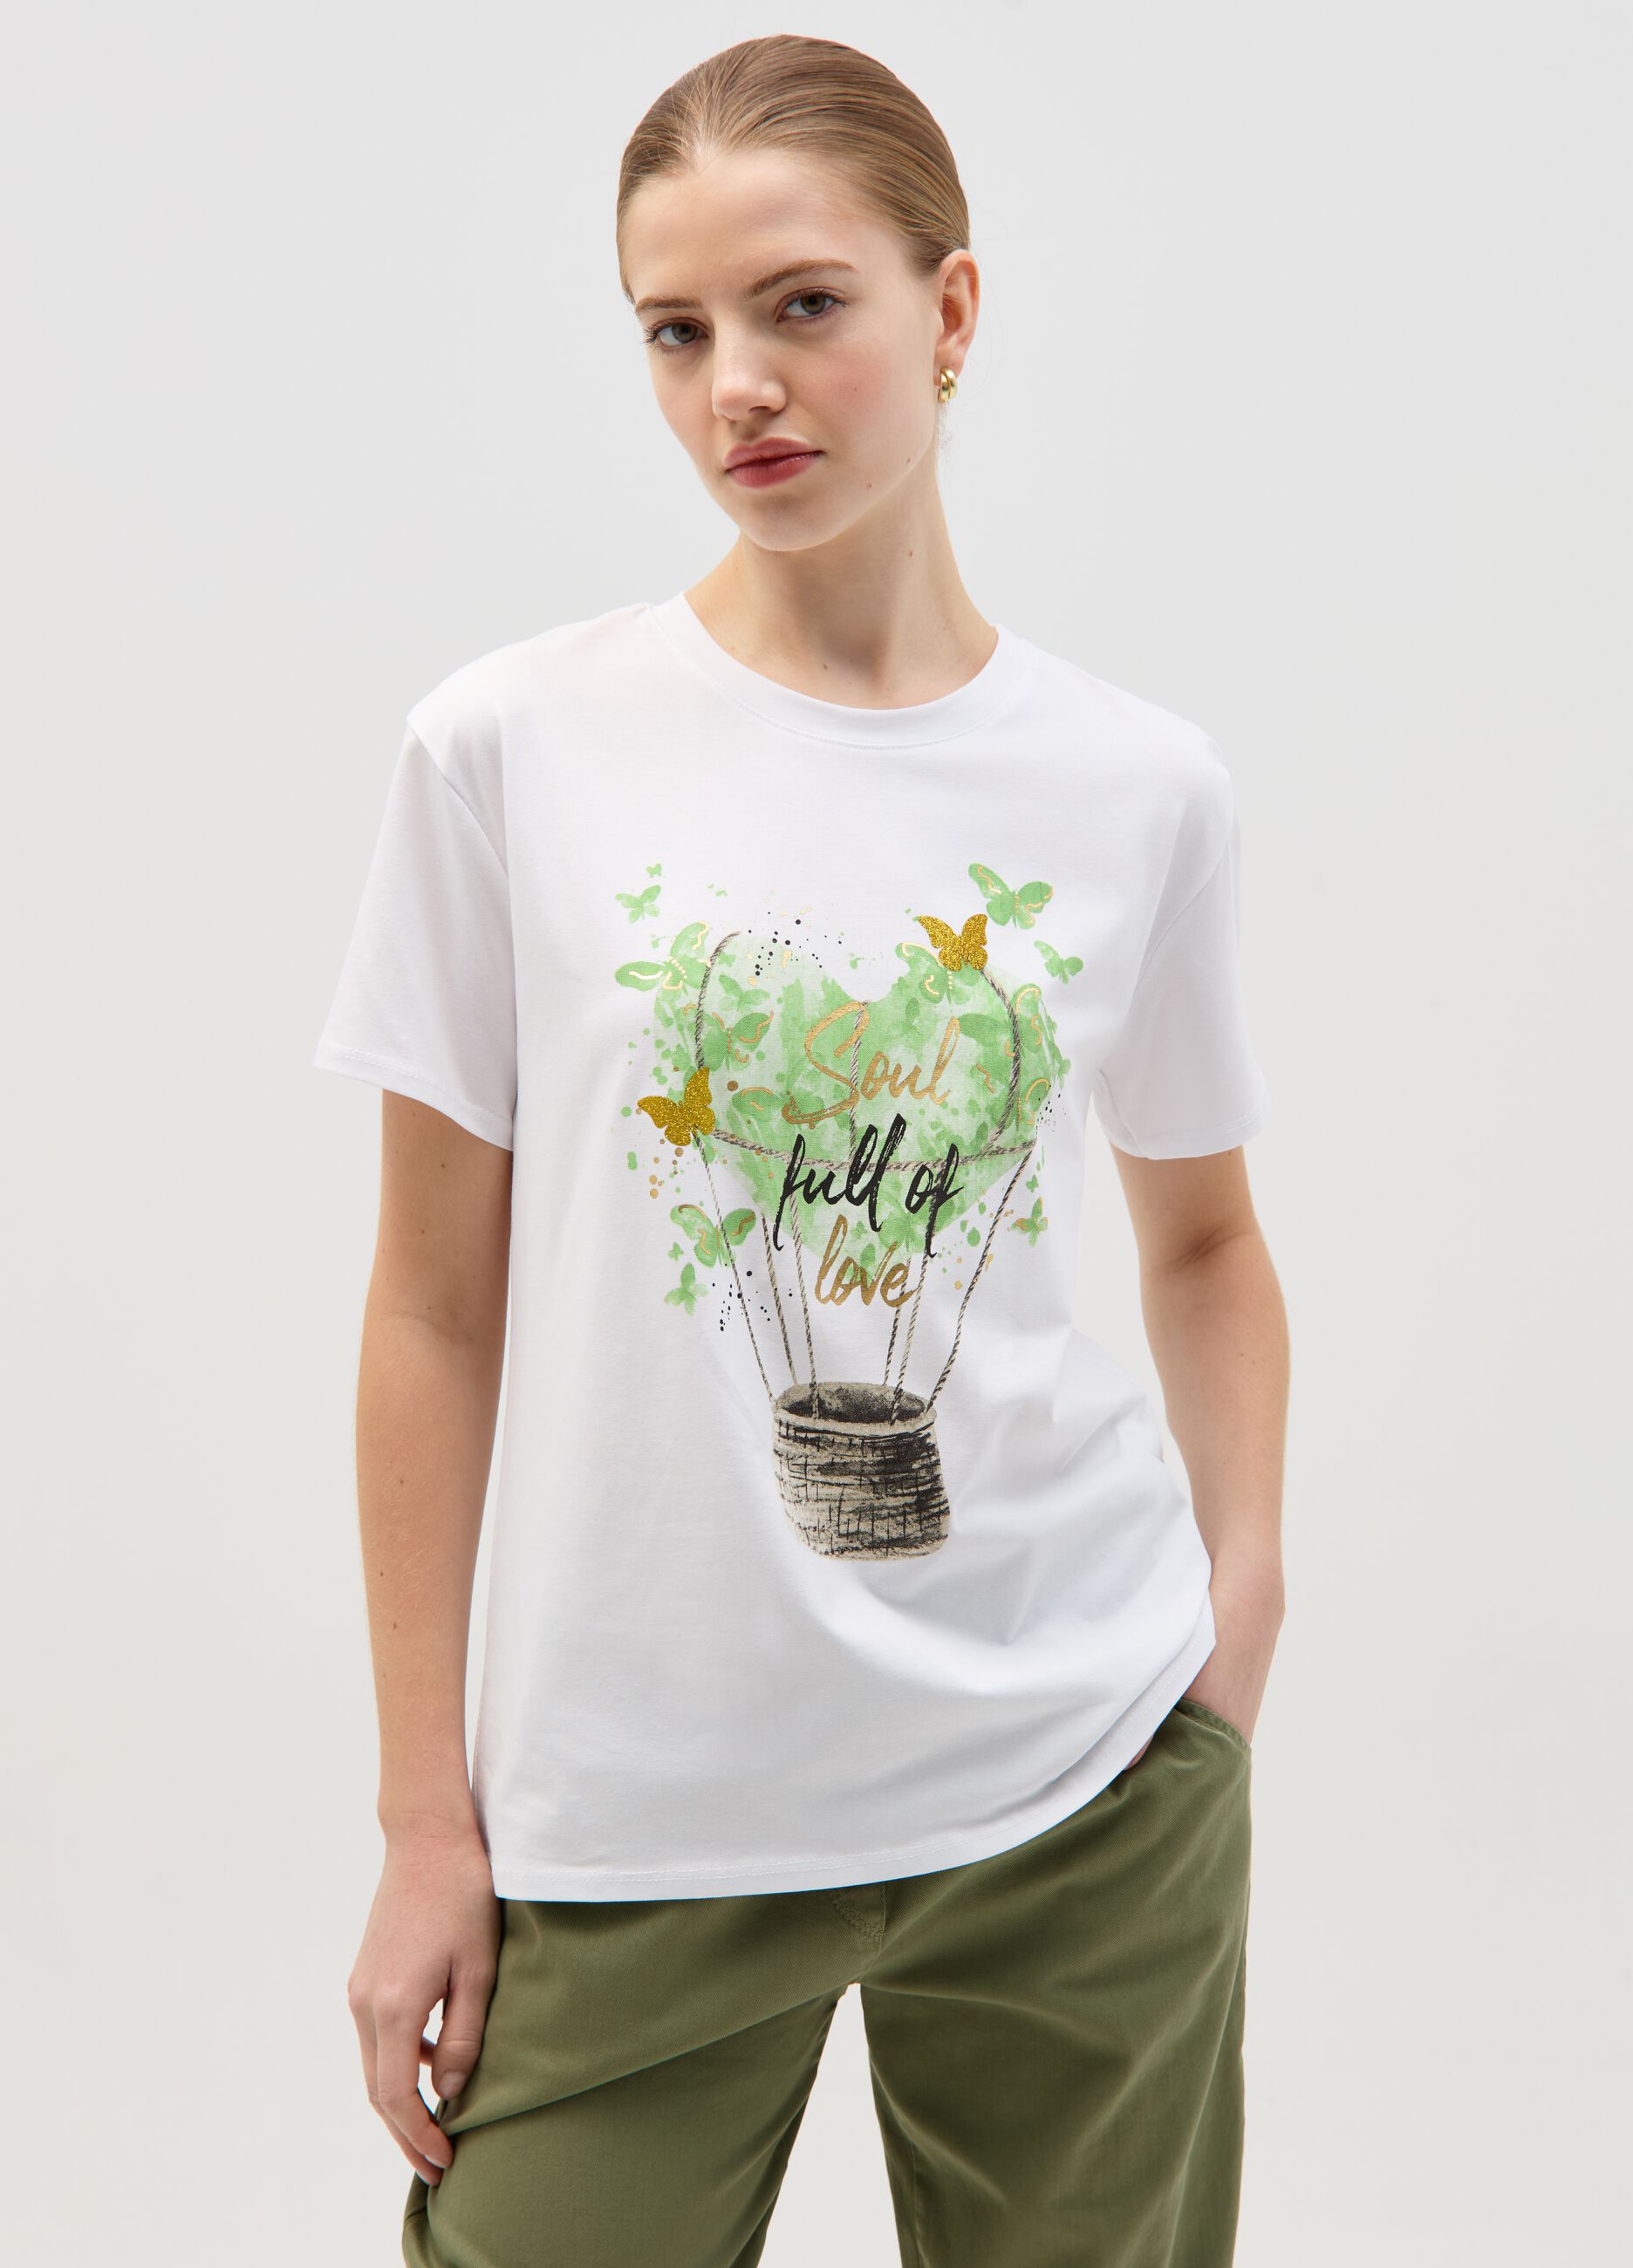 T-shirt with hot air balloon print in foil